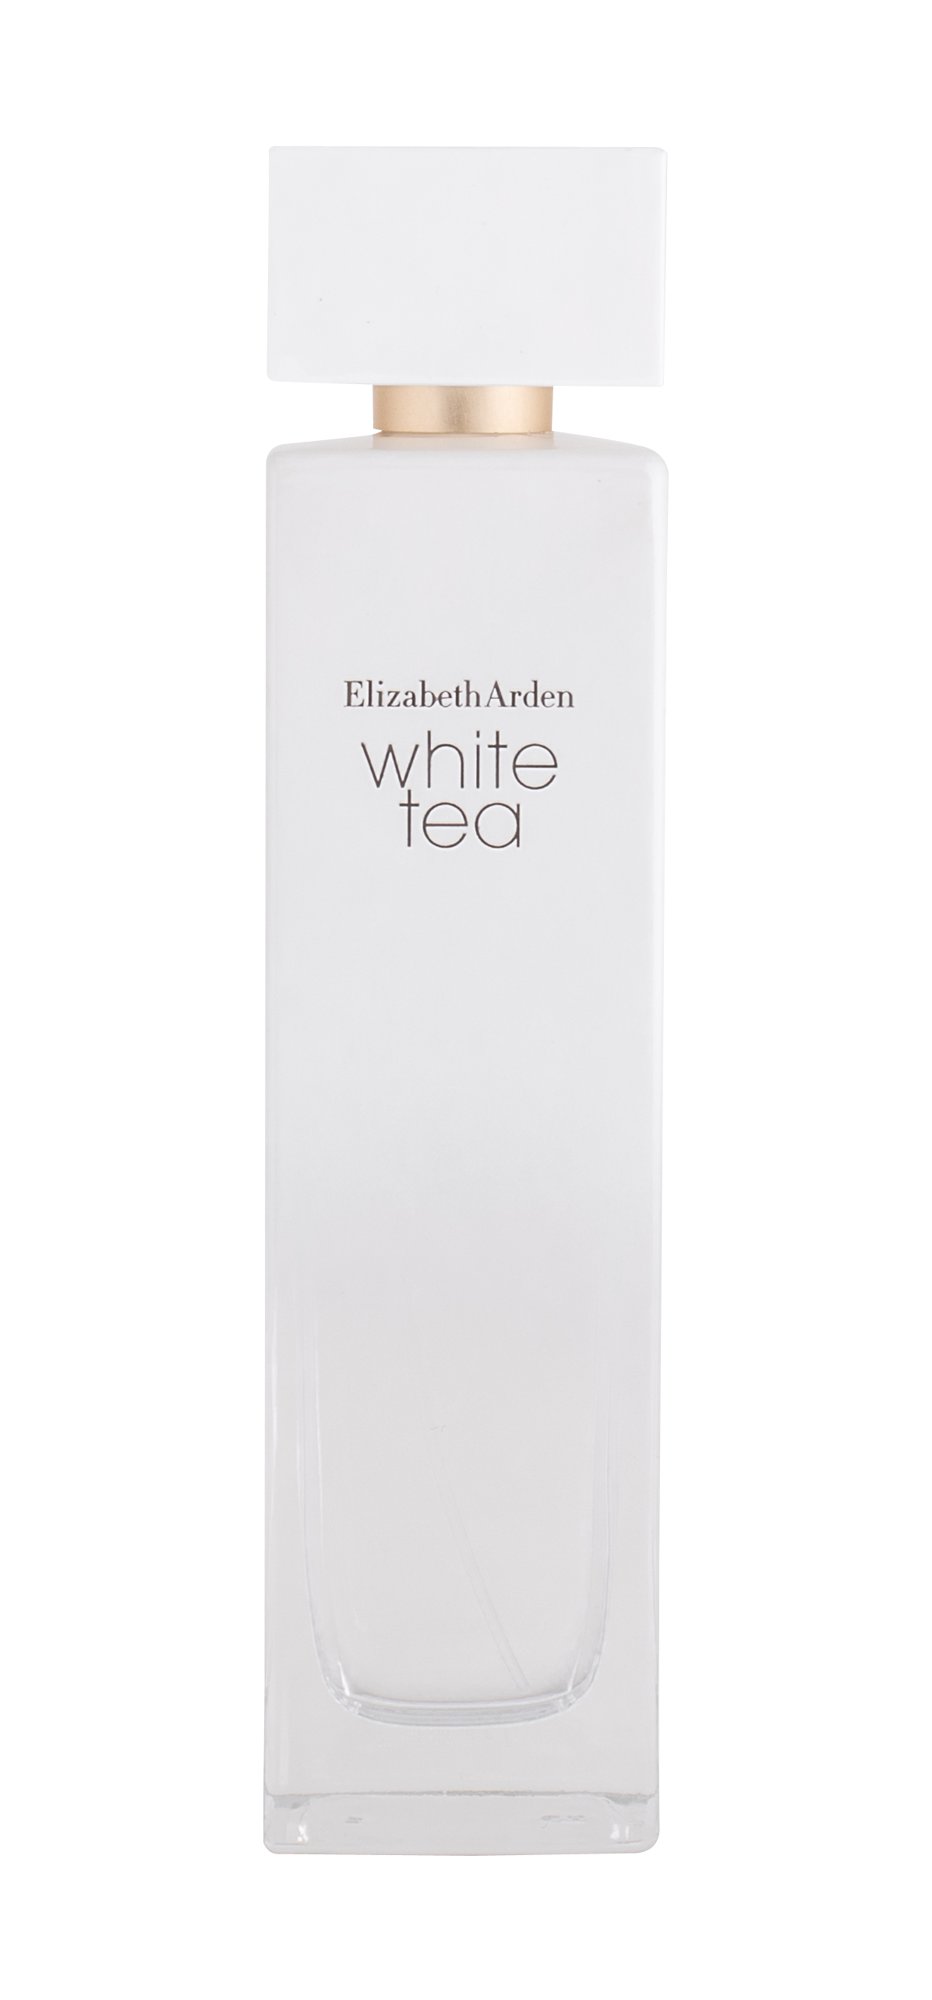 Elizabeth Arden White Tea, Toaletní voda 100ml